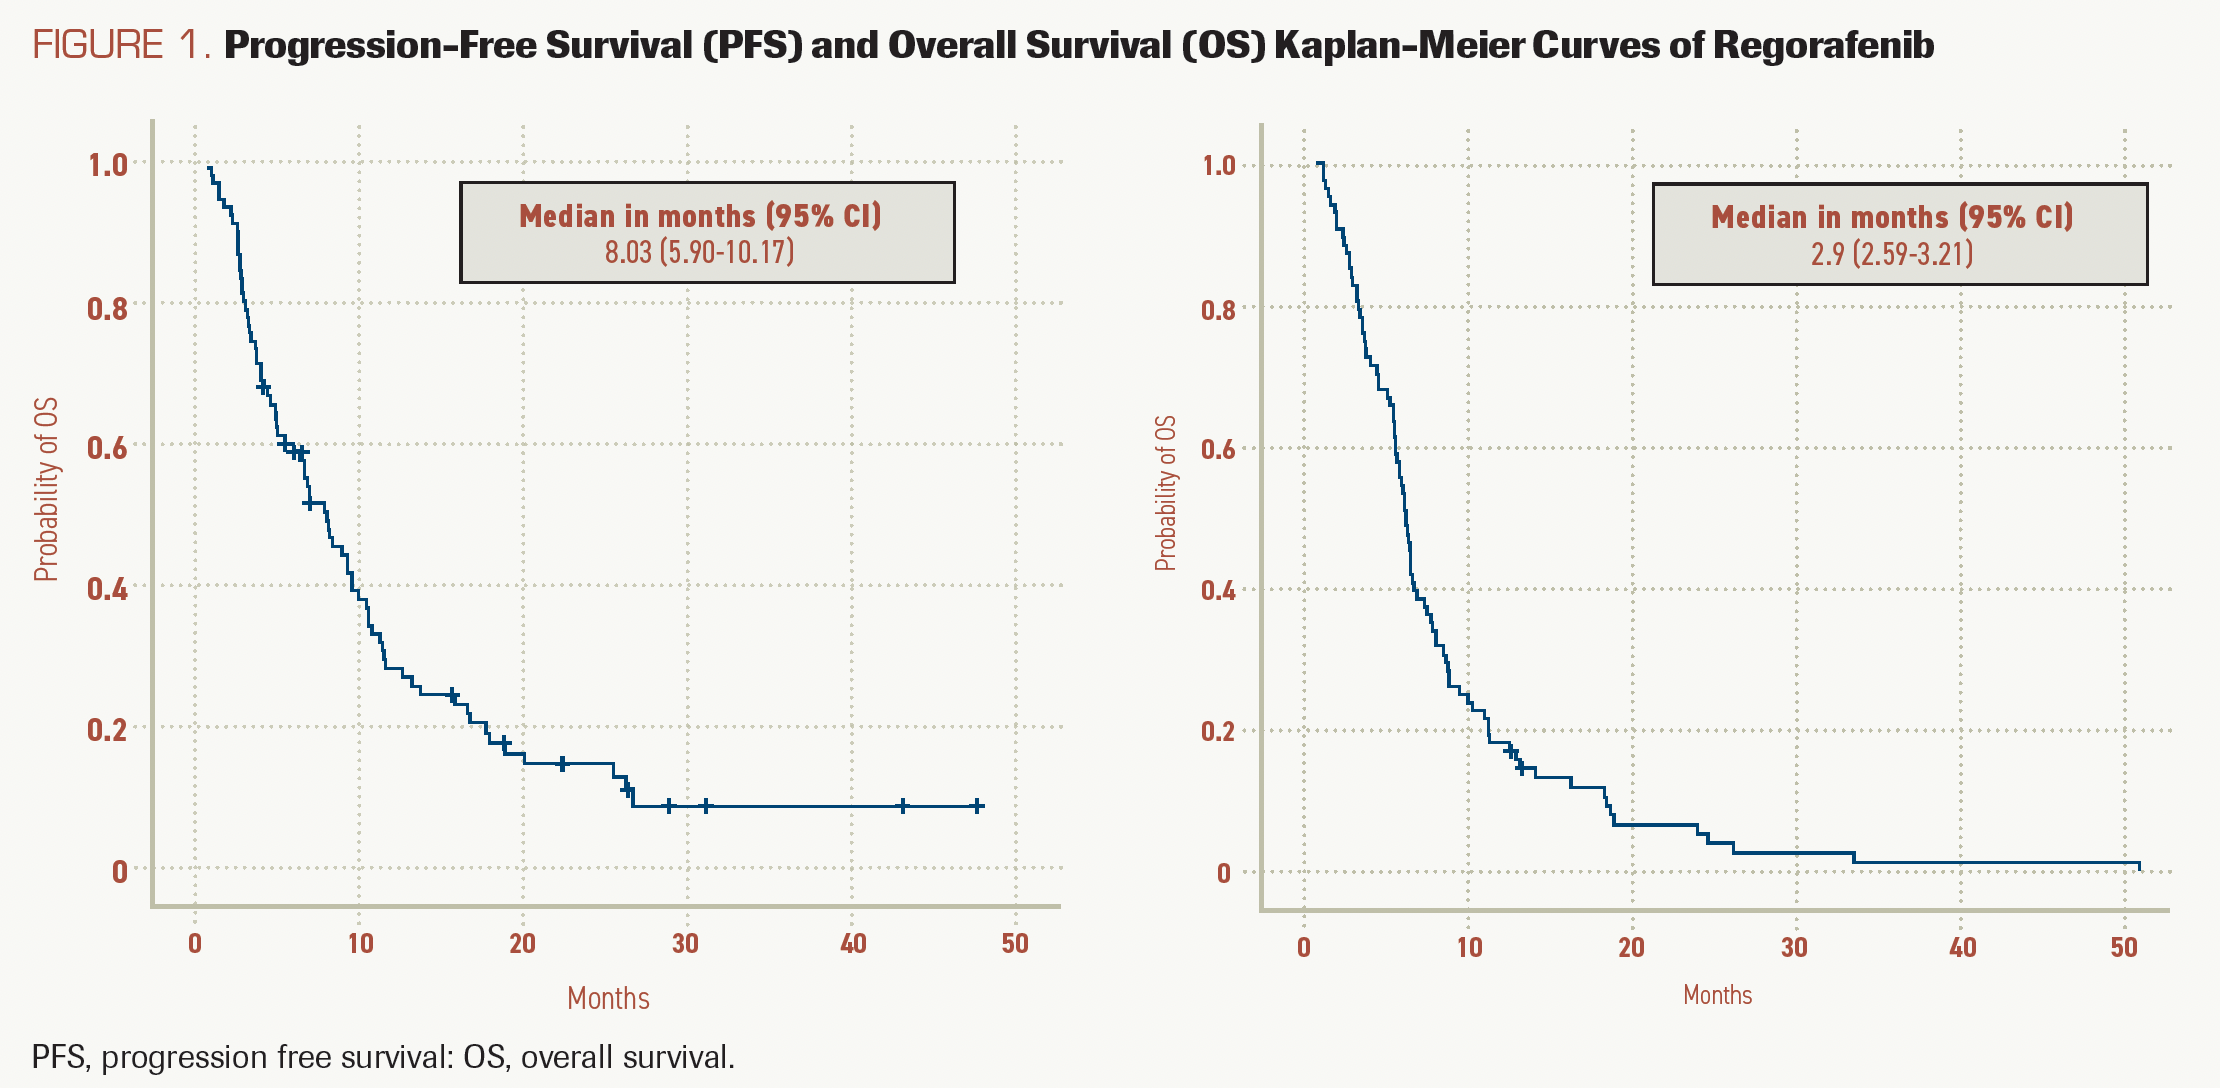 FIGURE 1. Progression-Free Survival (PFS) and Overall Survival (OS) Kaplan-Meier Curves of Regorafenib